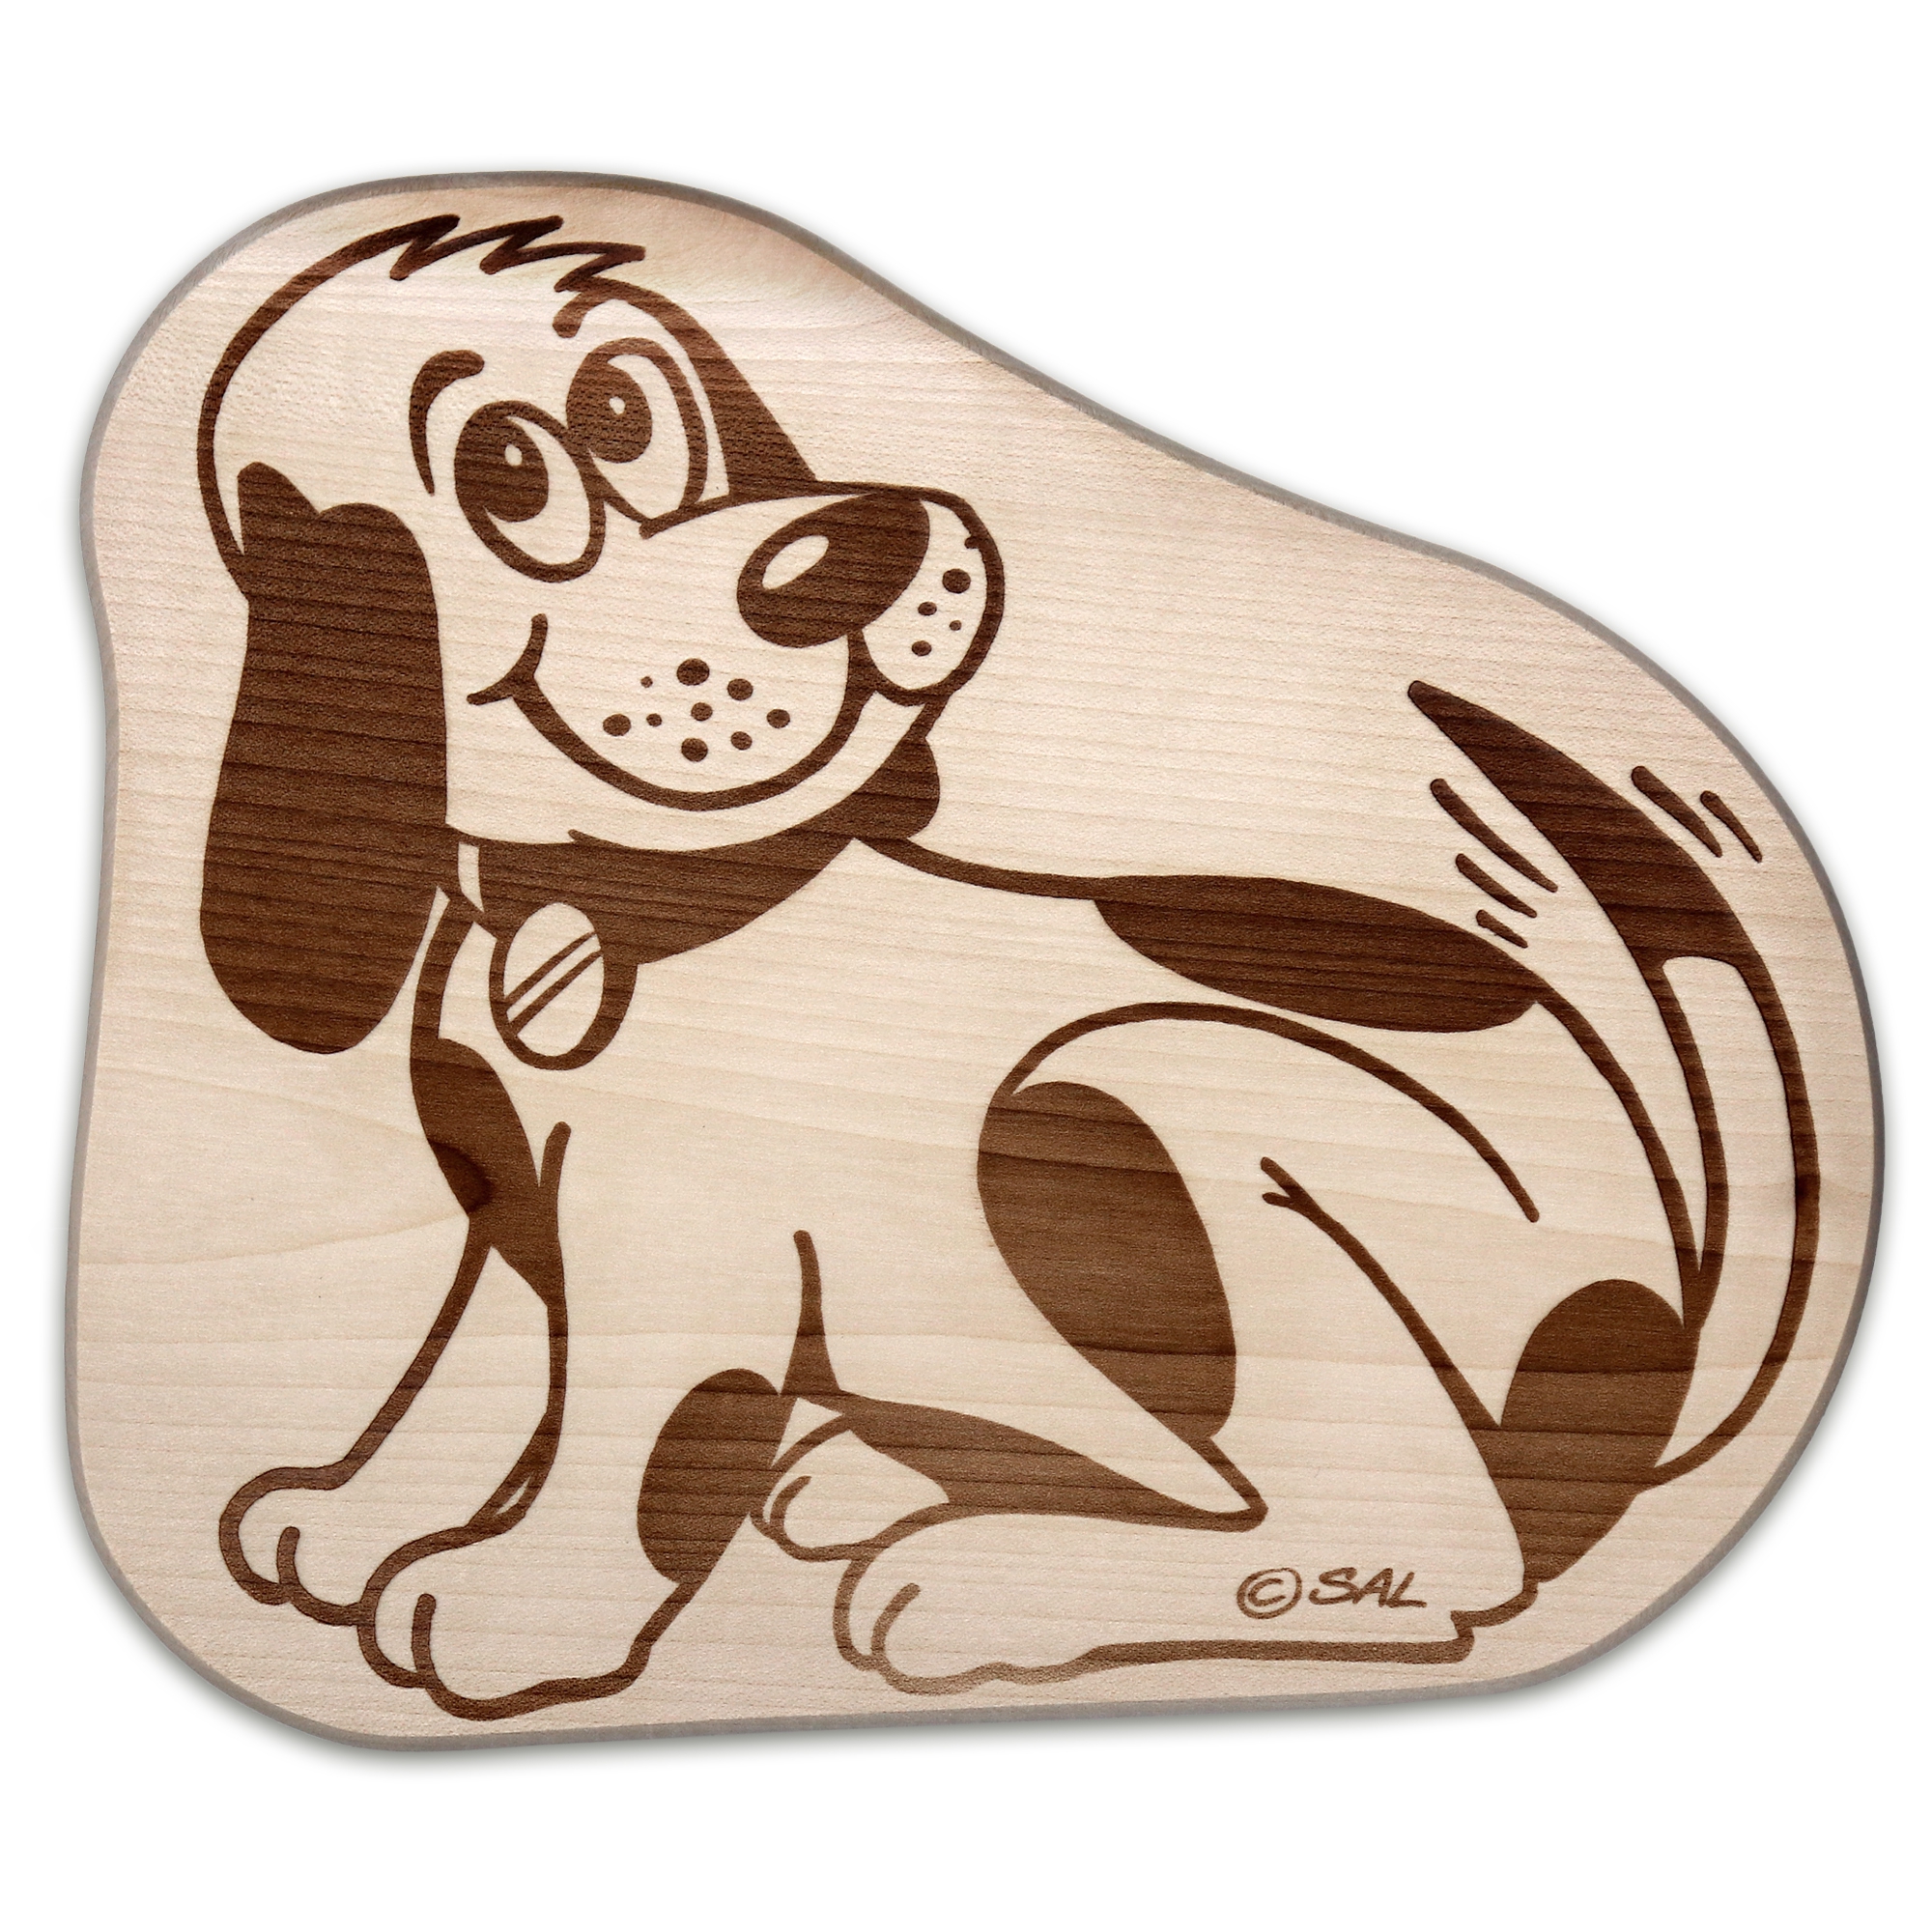 Culinaris - Breakfast board - maple wood - dog